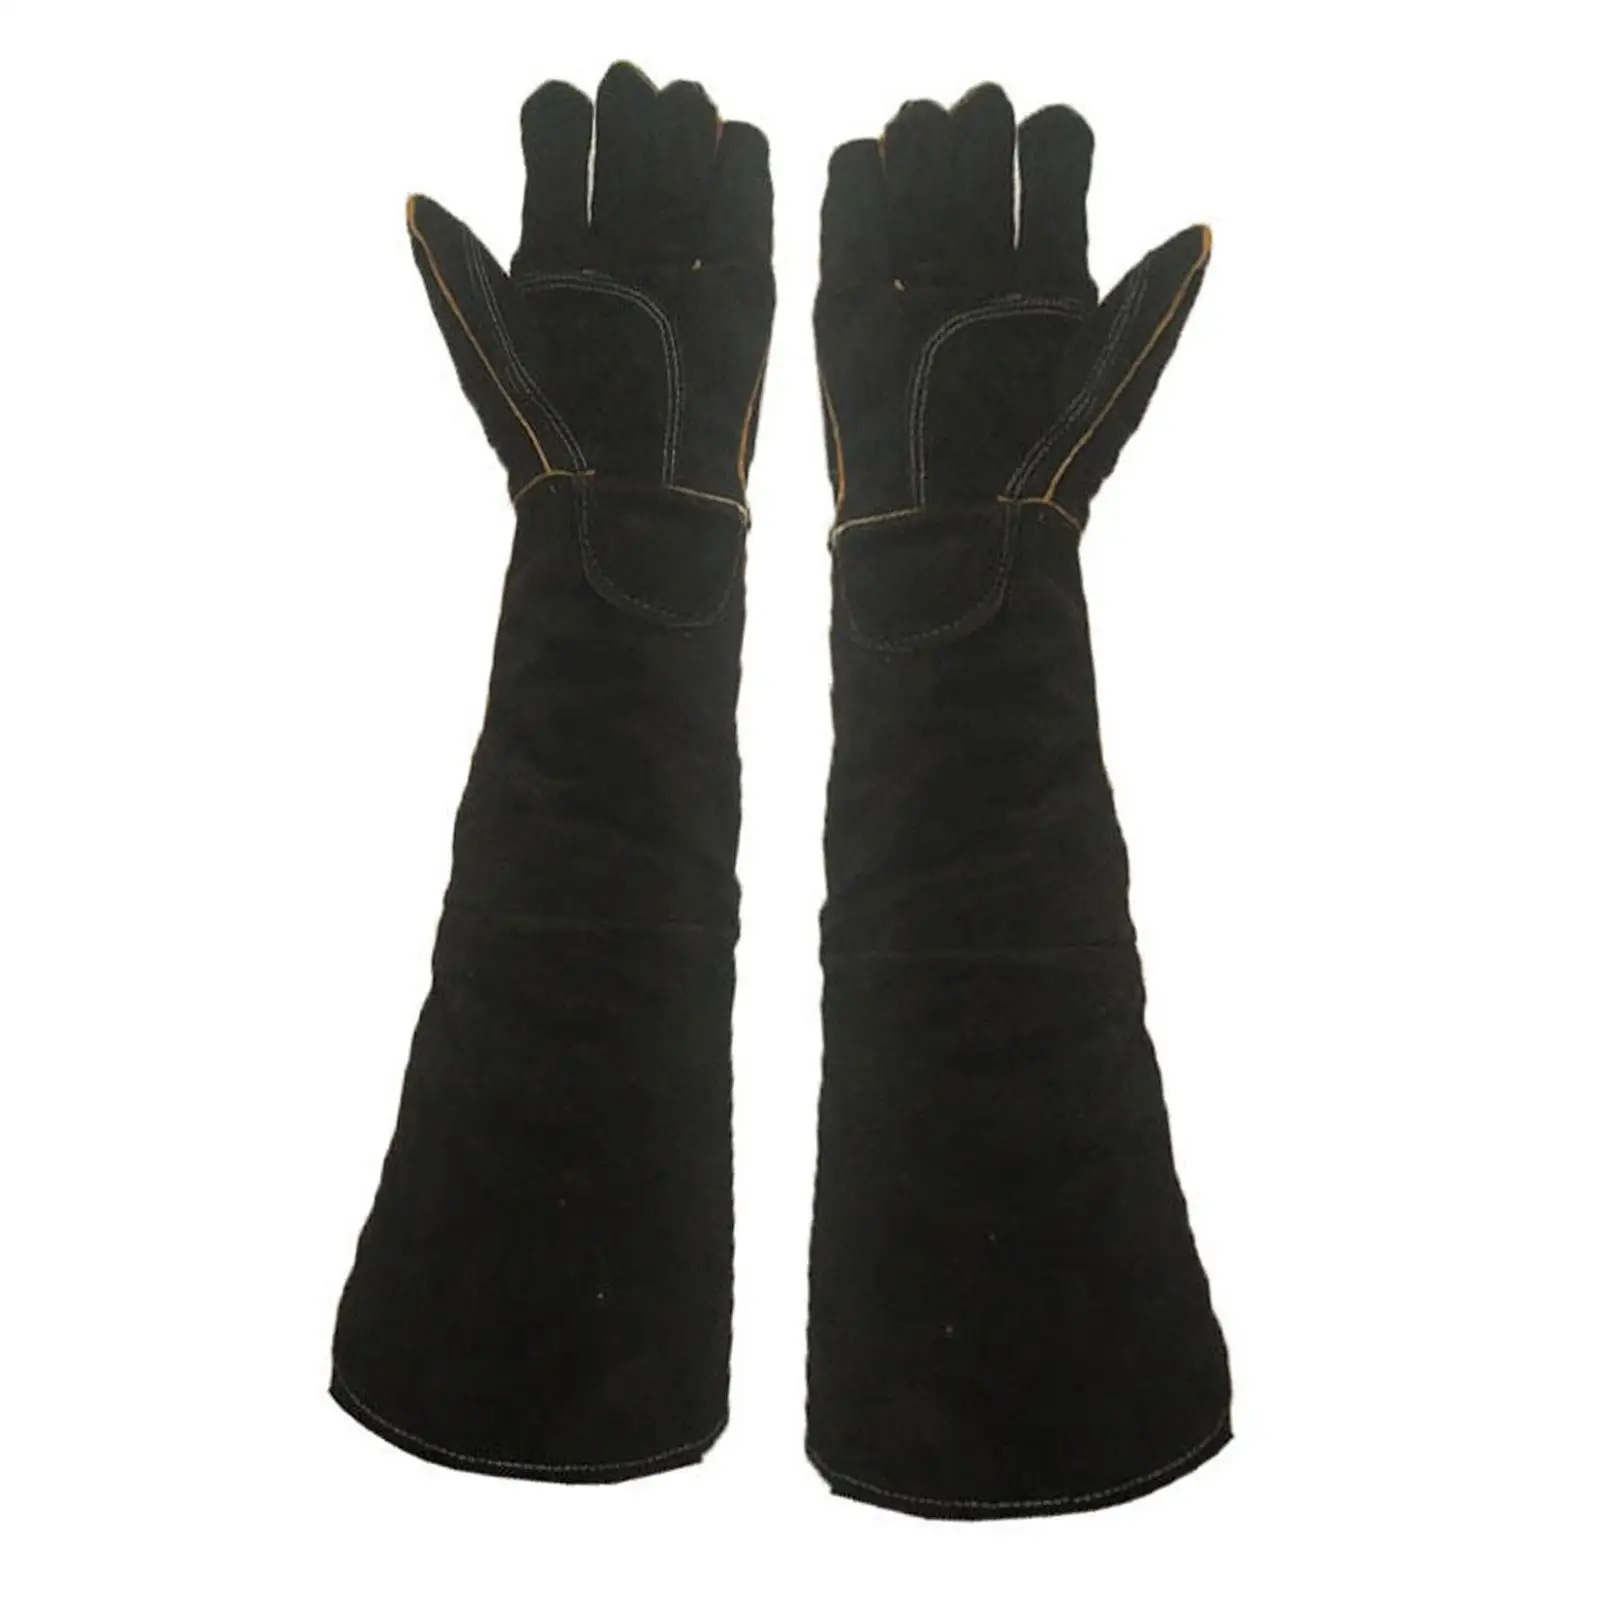 Animal Handling Gloves Bite Resistant Multipurpose Scratch Resistant Portable Durable Protective Gloves for Dogs Birds Gardening